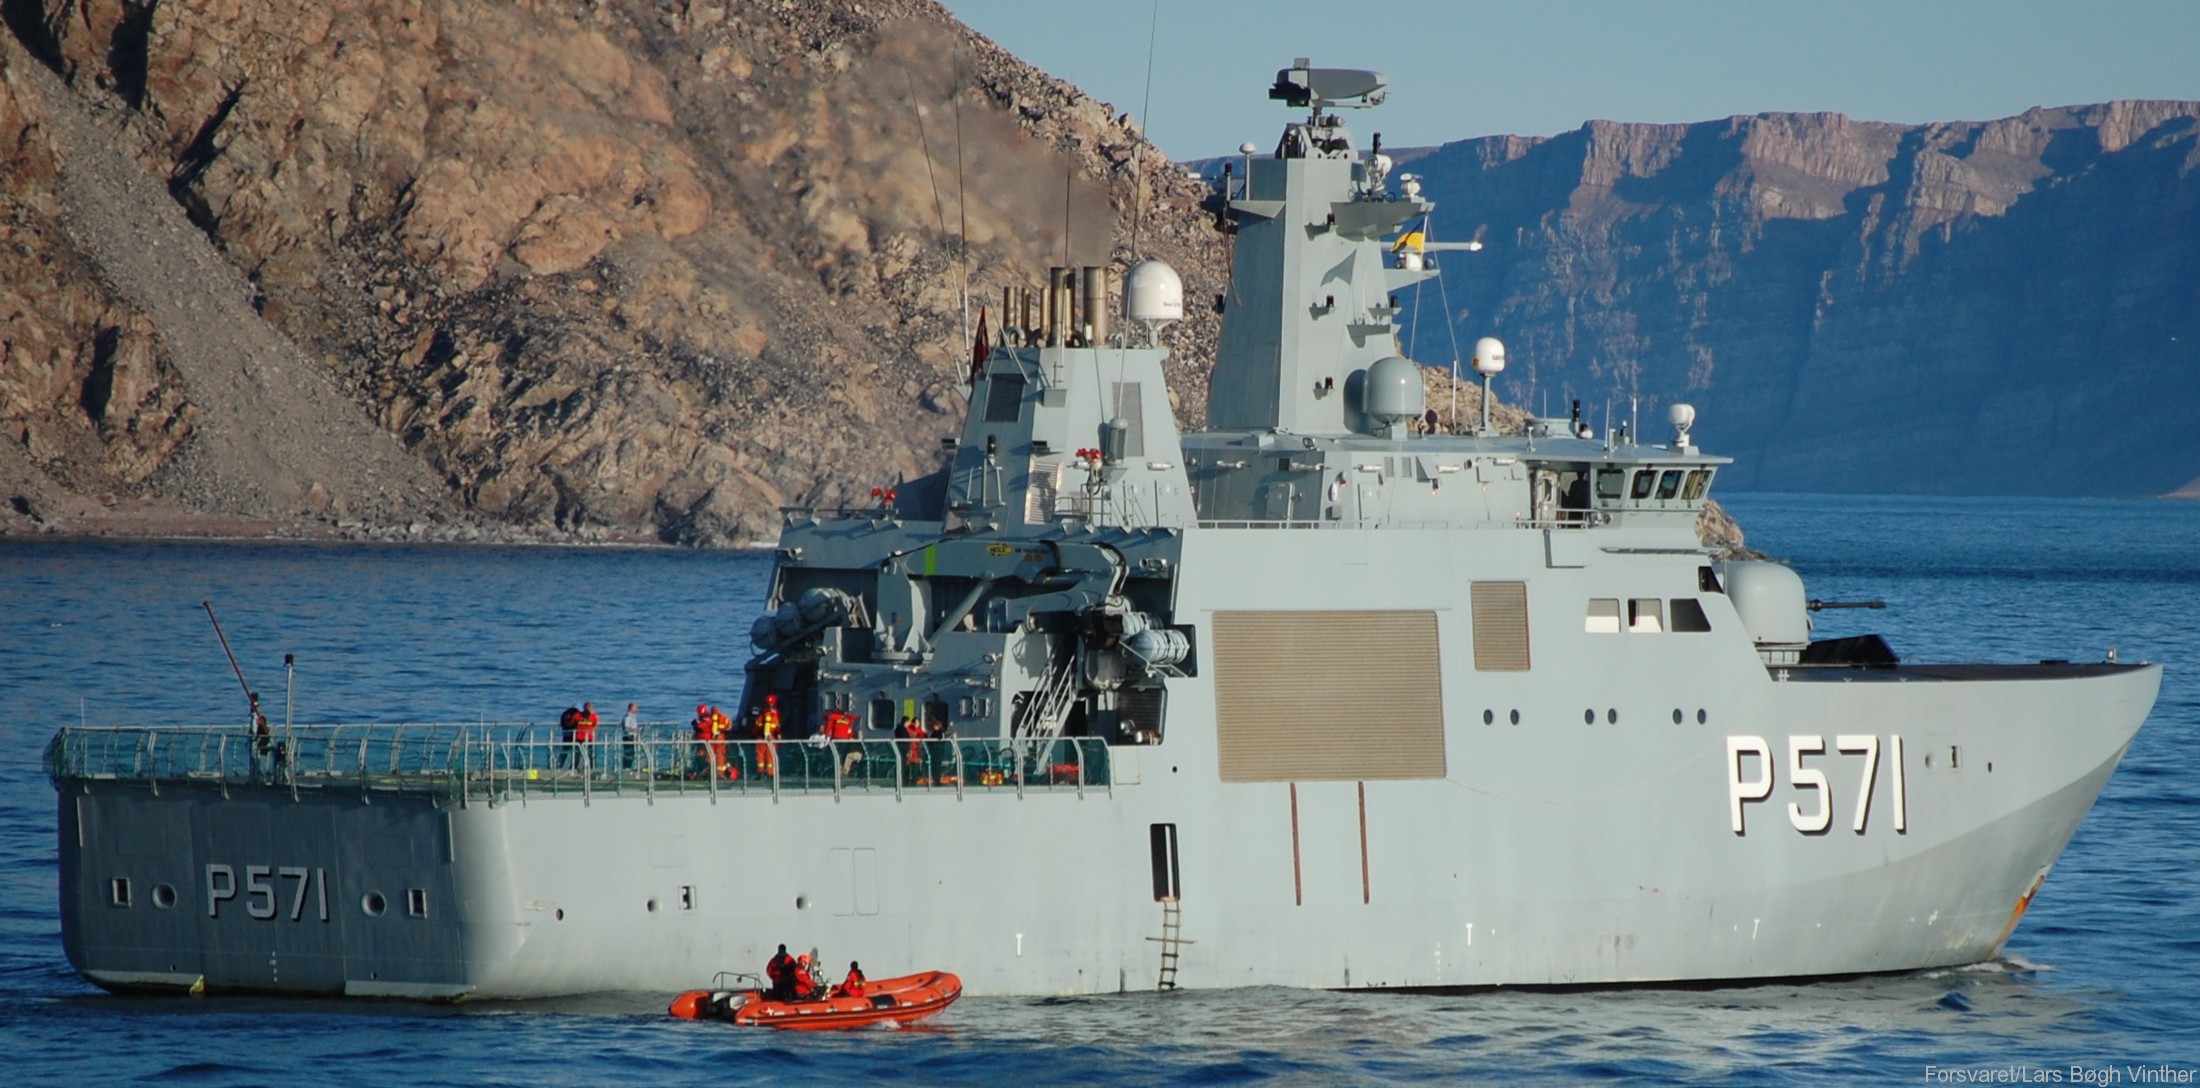 p-571 hdms ejnar mikkelsen knud rasmussen class offshore patrol vessel opv royal danish navy inspektionsfartøj 31